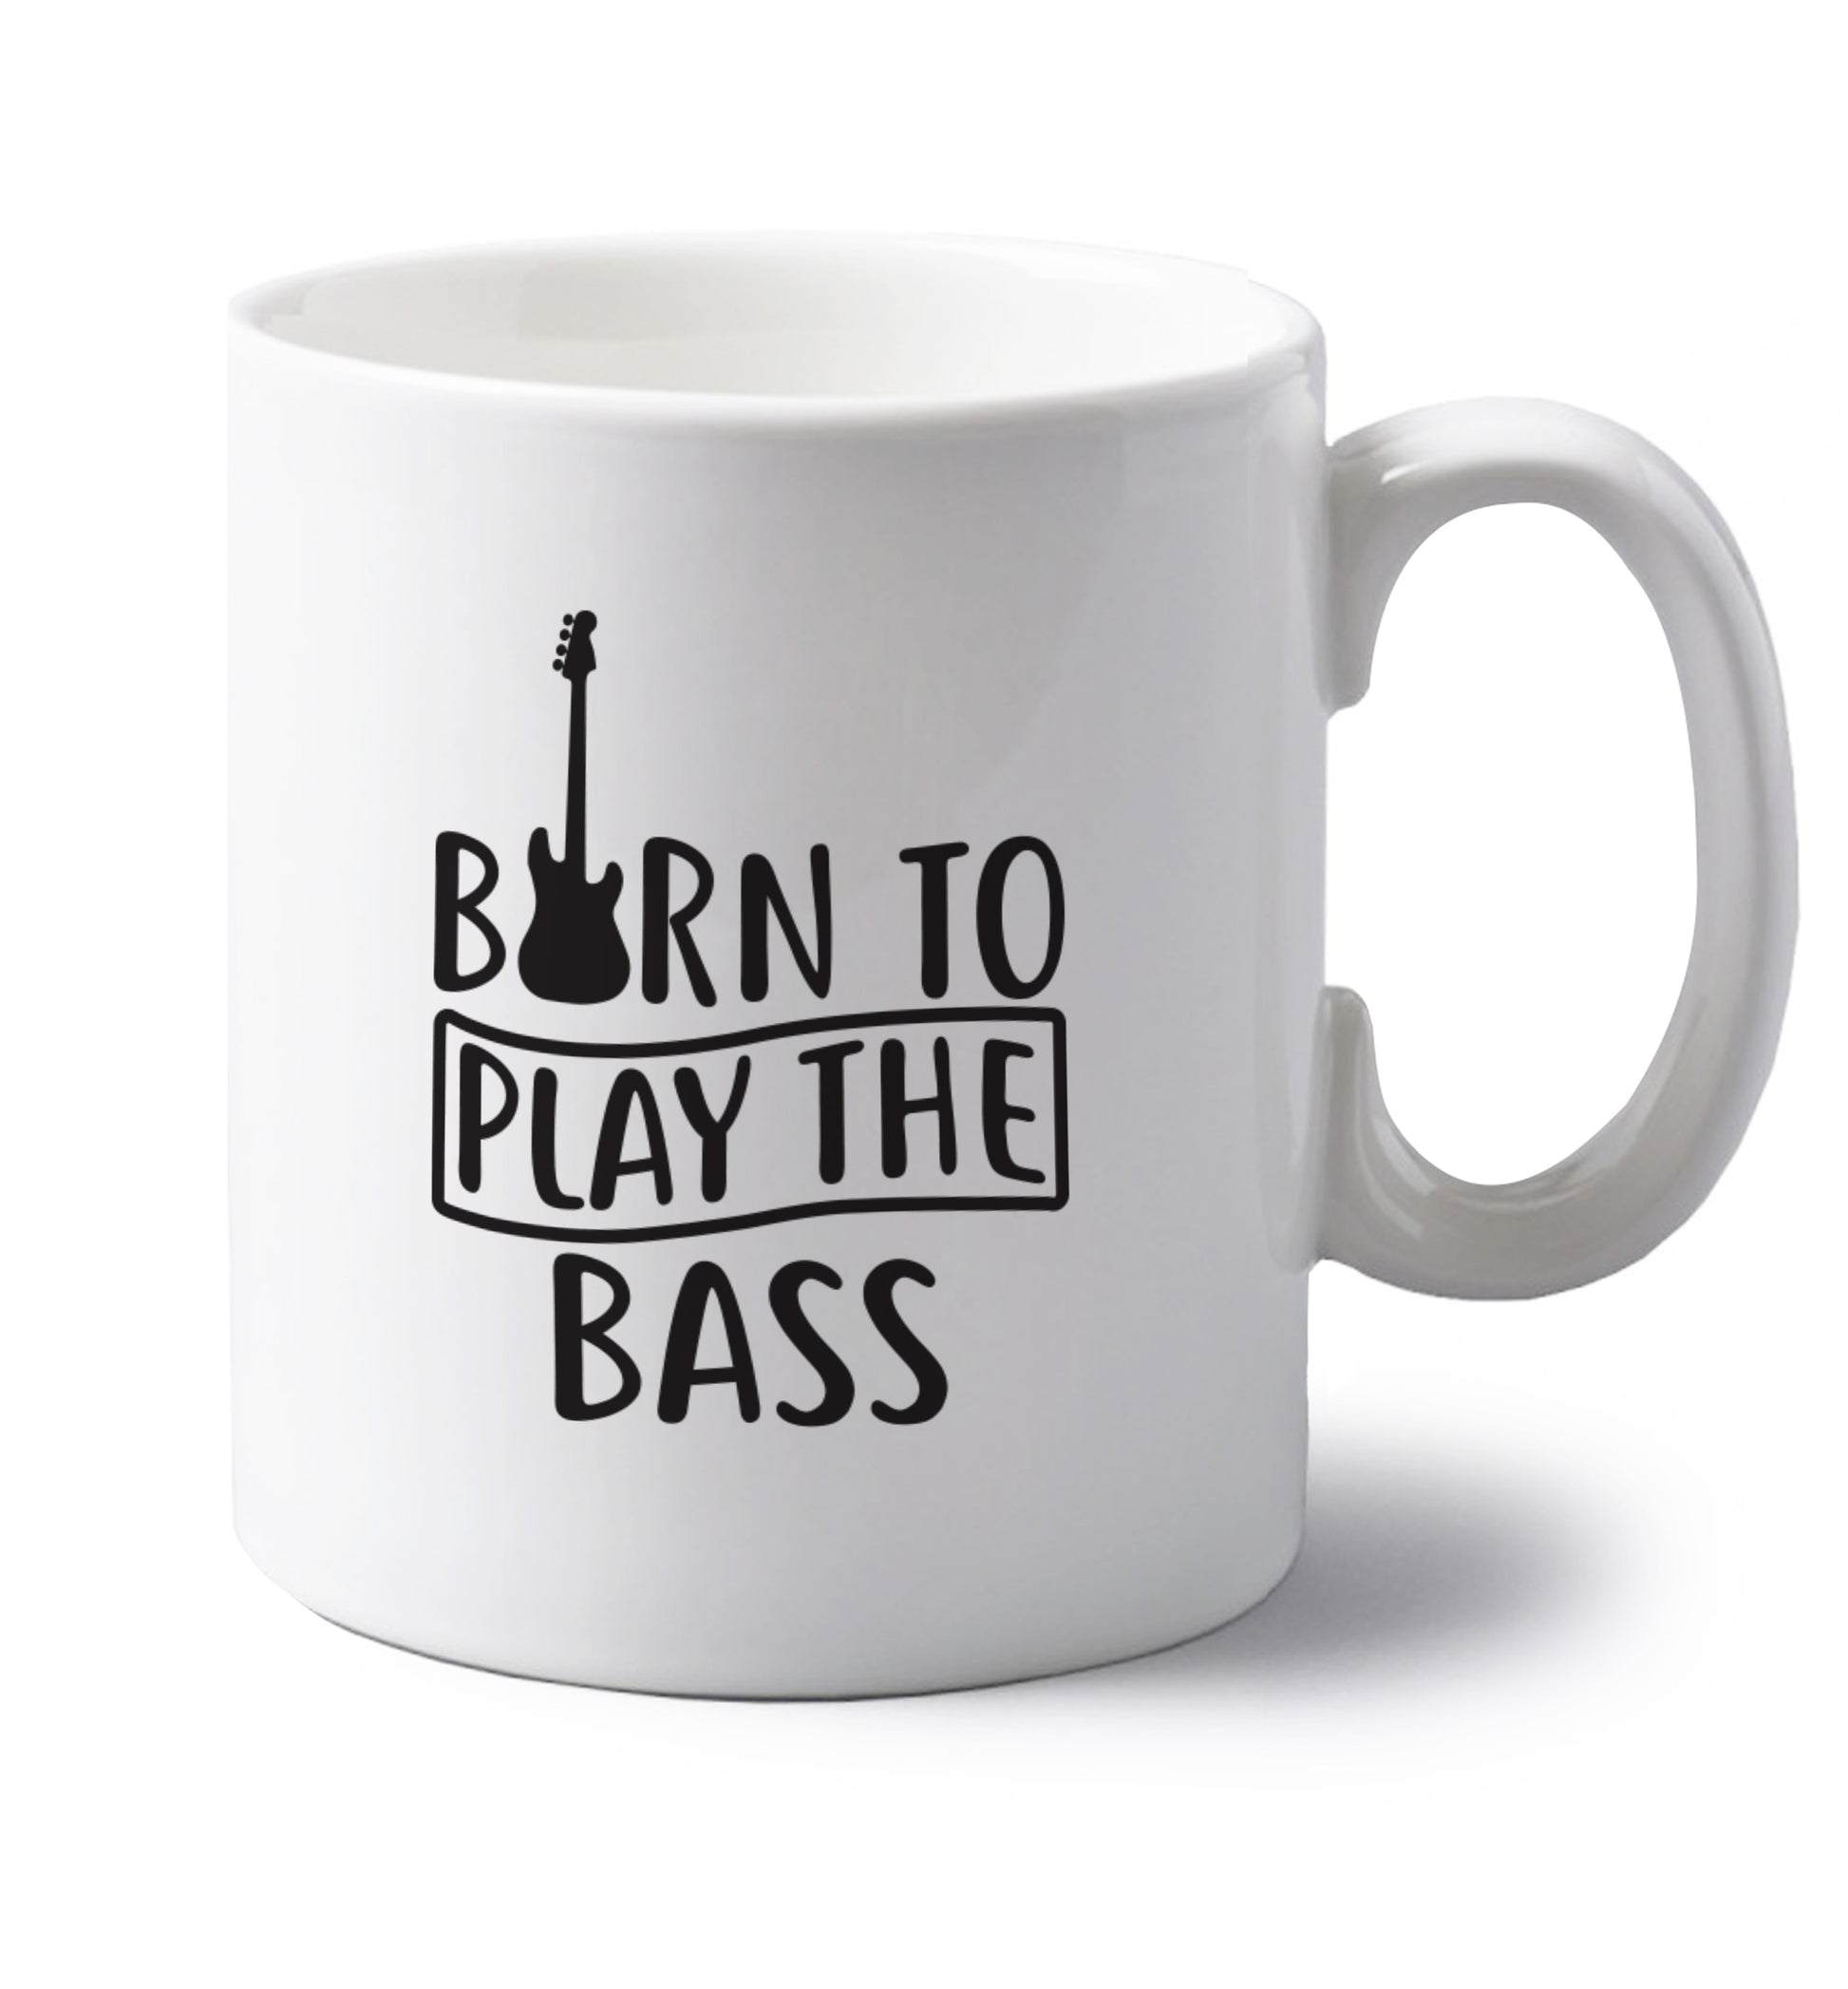 Born to play the bass left handed white ceramic mug 